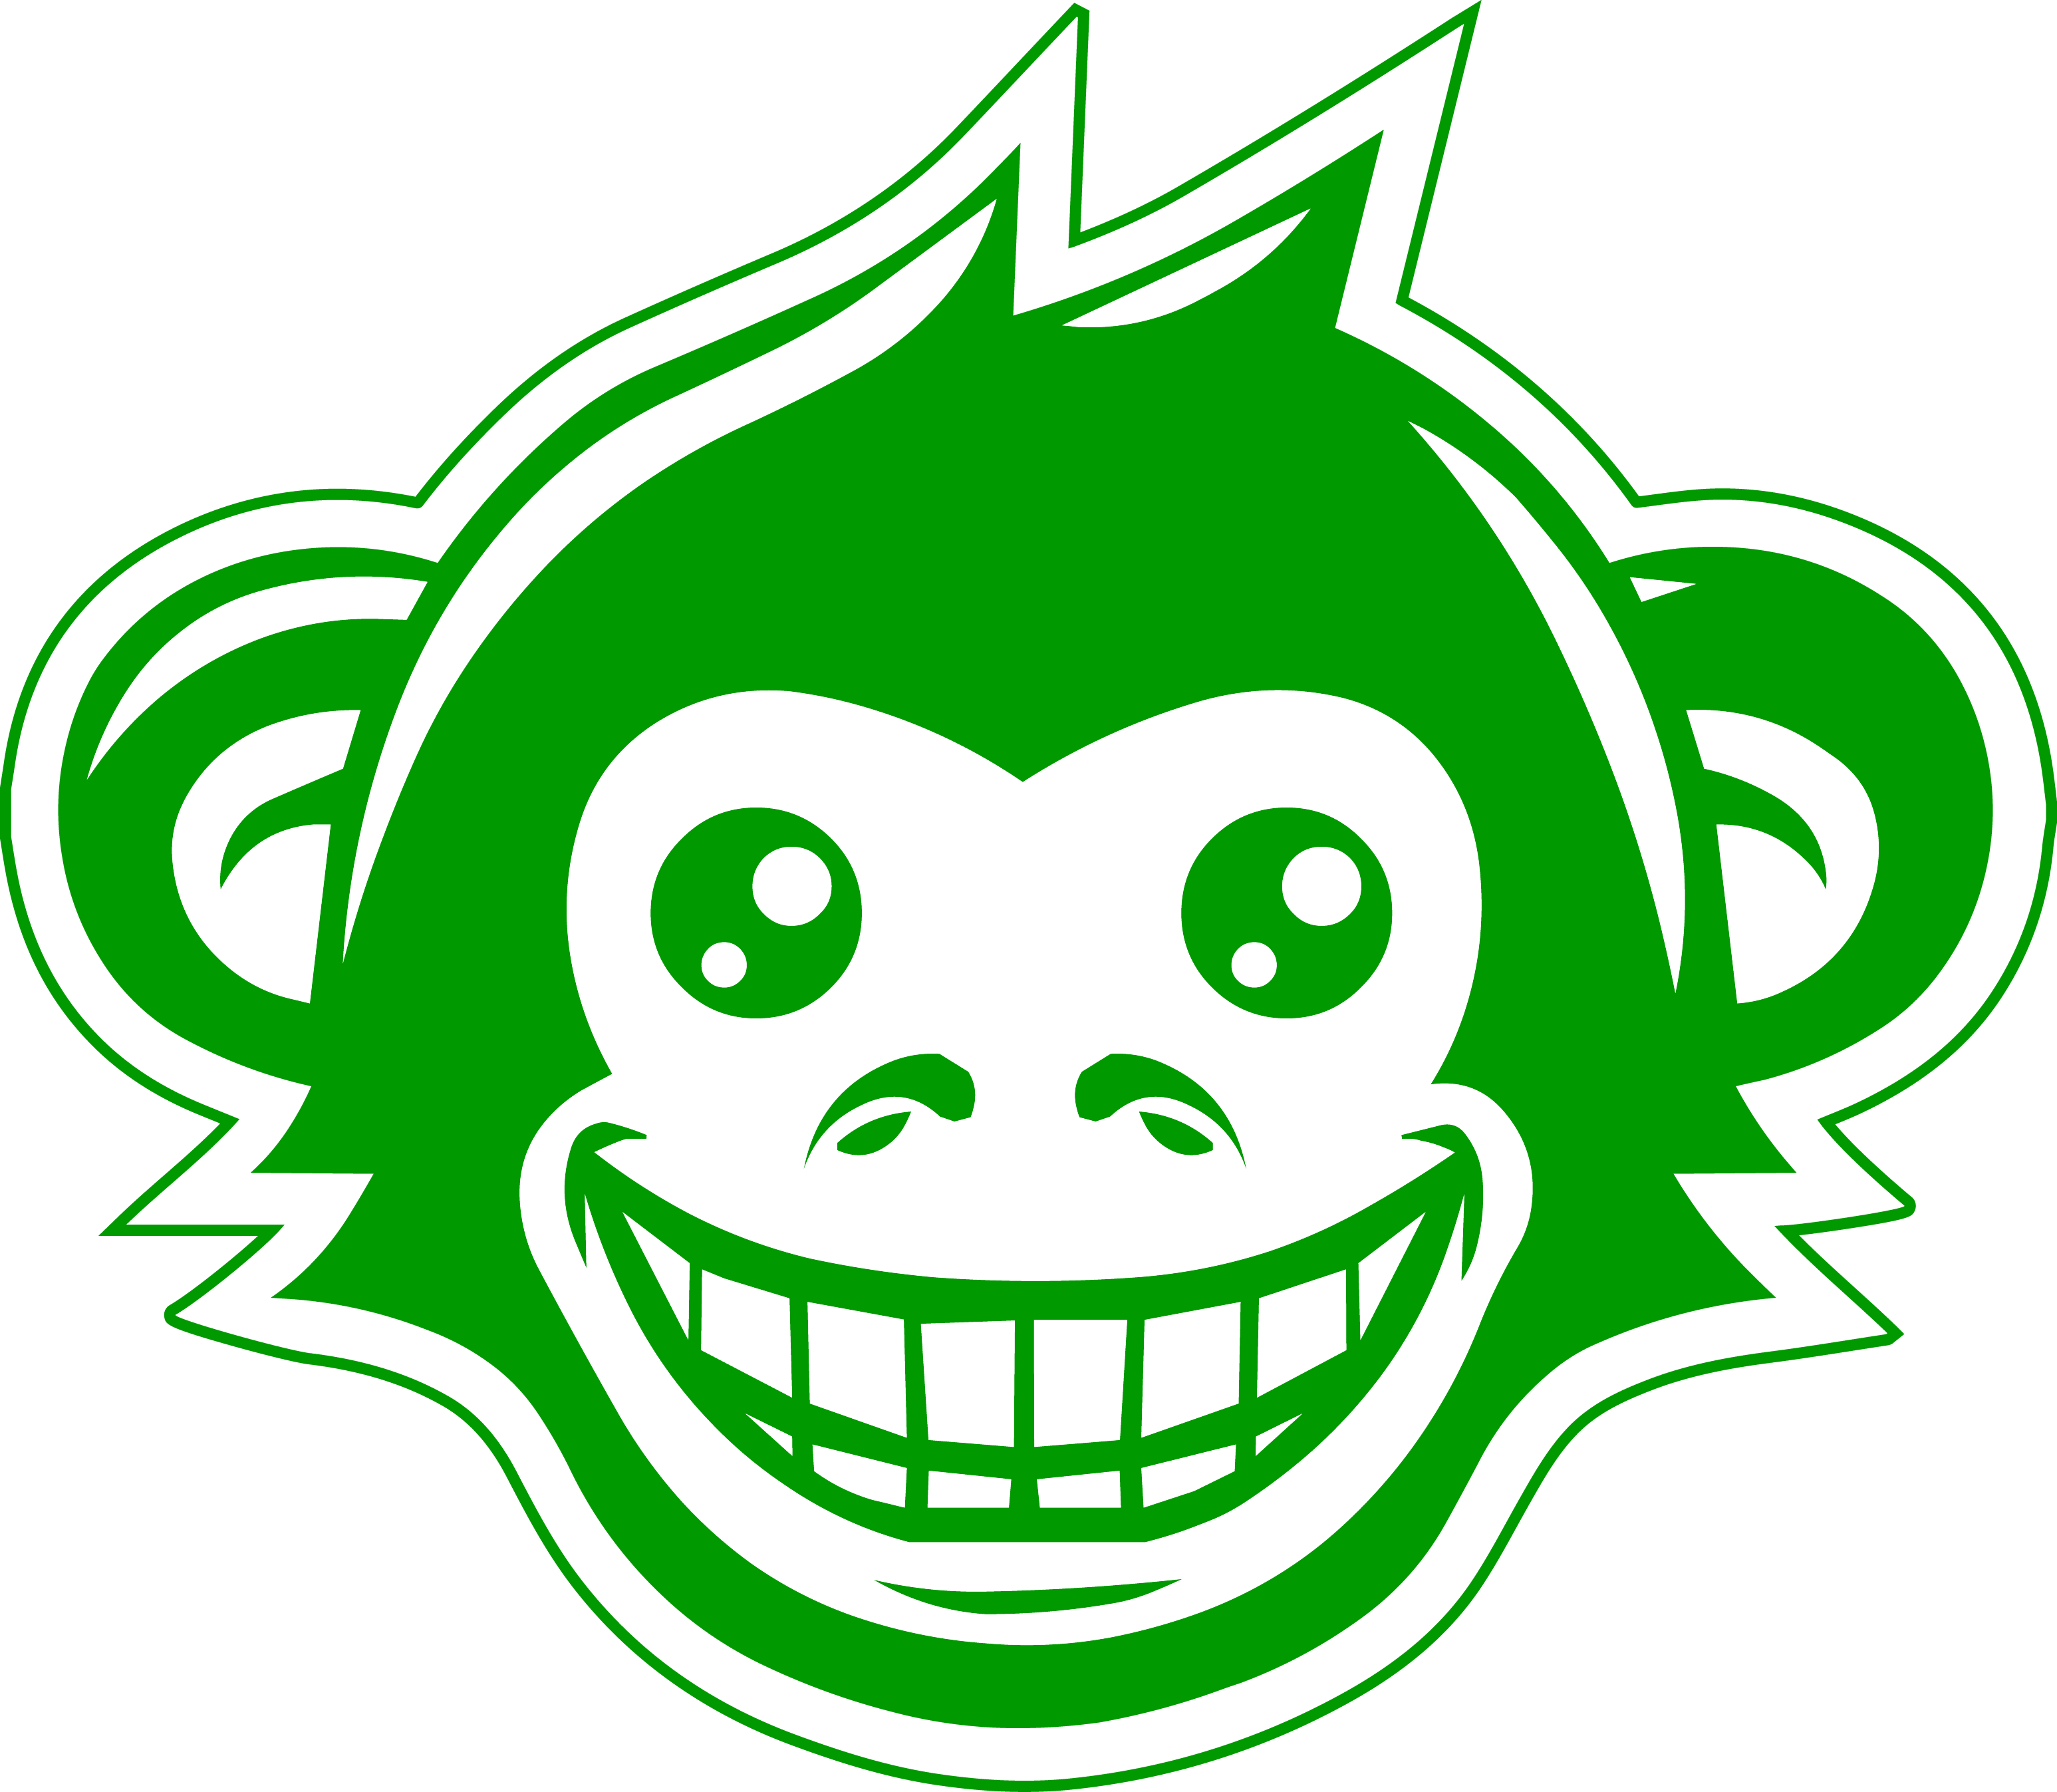 Greenmonkey - Monkey Green (3093x2694)